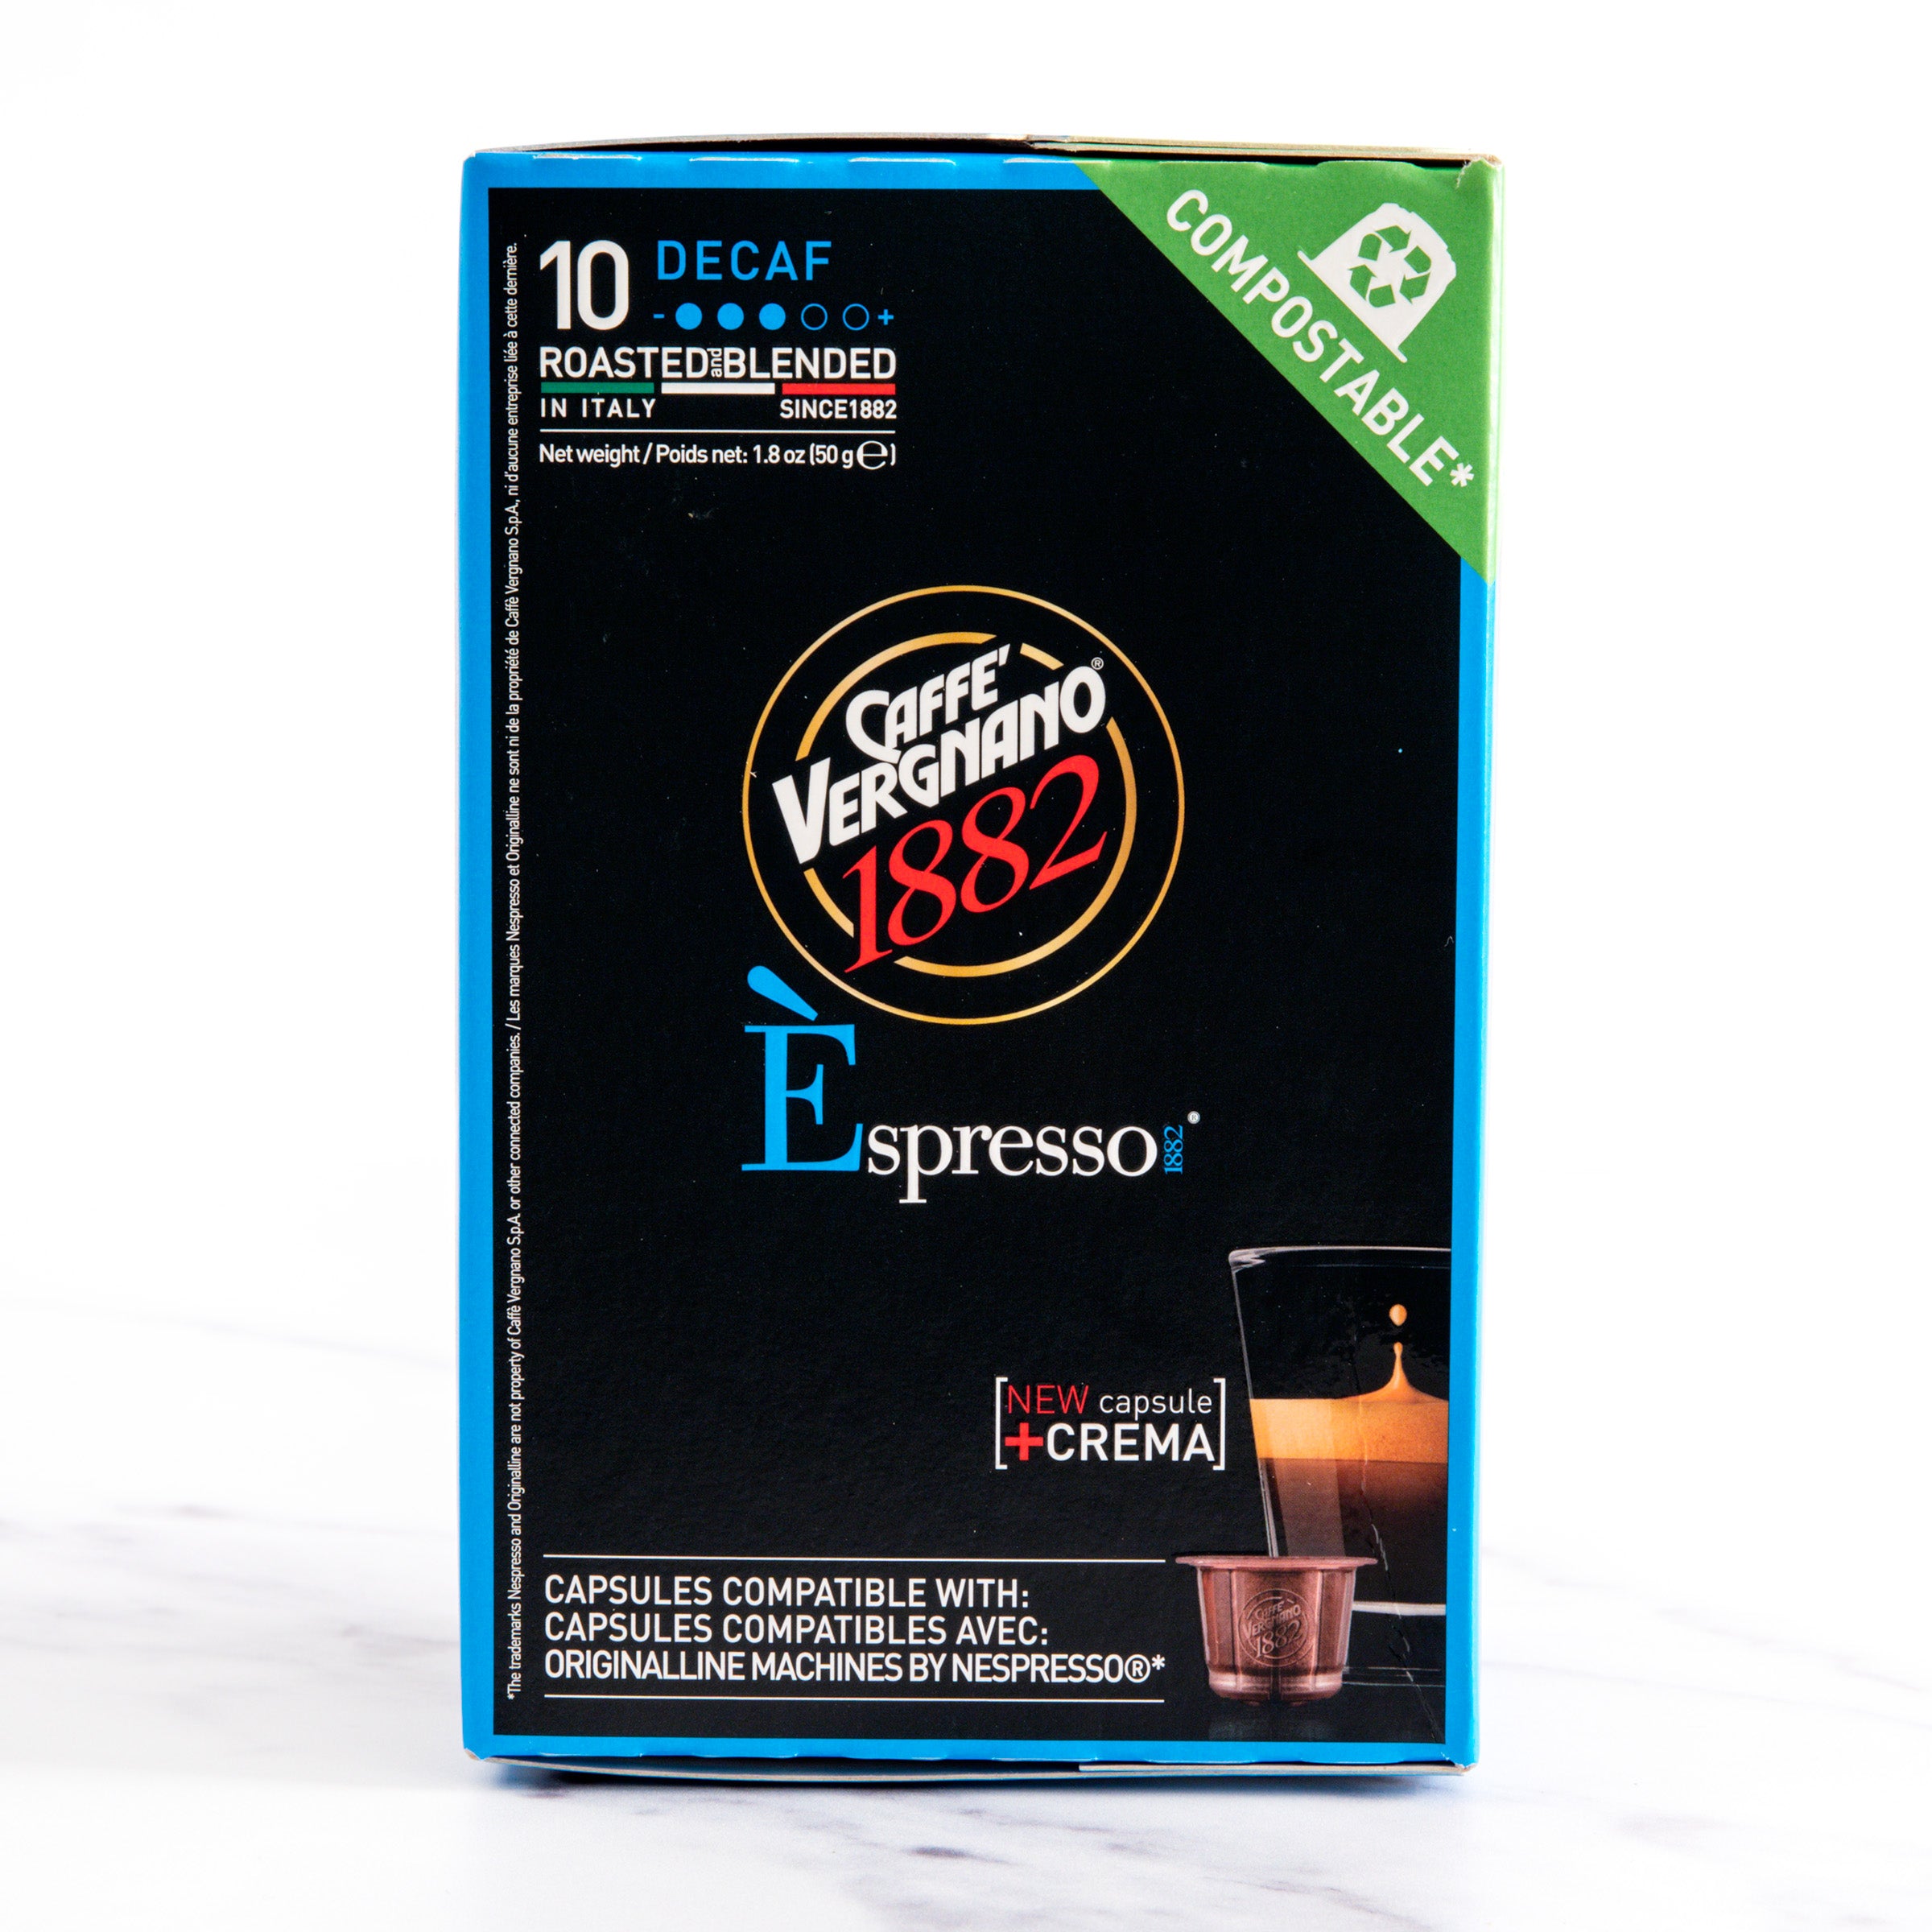 Nespresso Pro Capsules 2 boxes (100 capsules) choose from 12 aromas